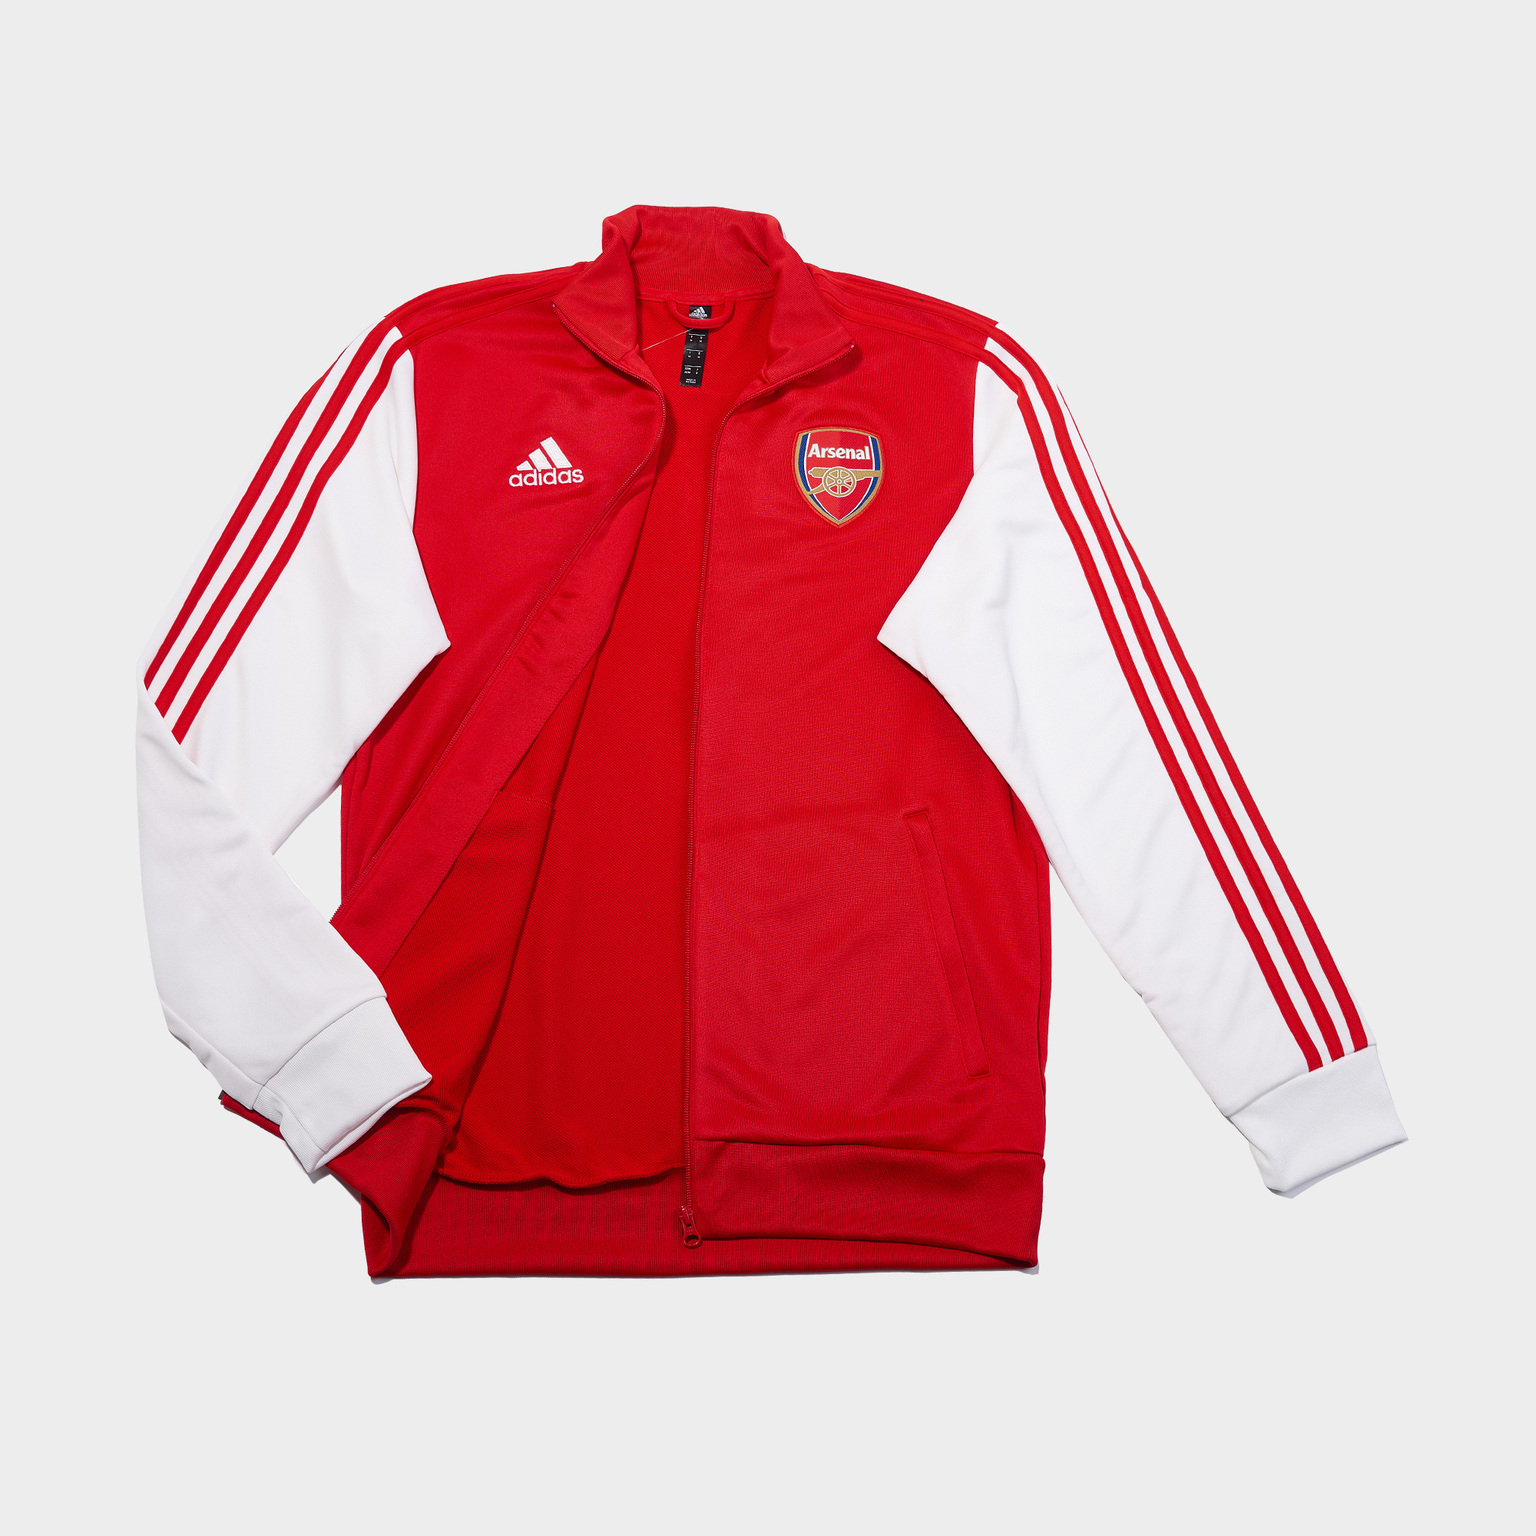 Олимпийка Adidas Arsenal сезон 2020/21